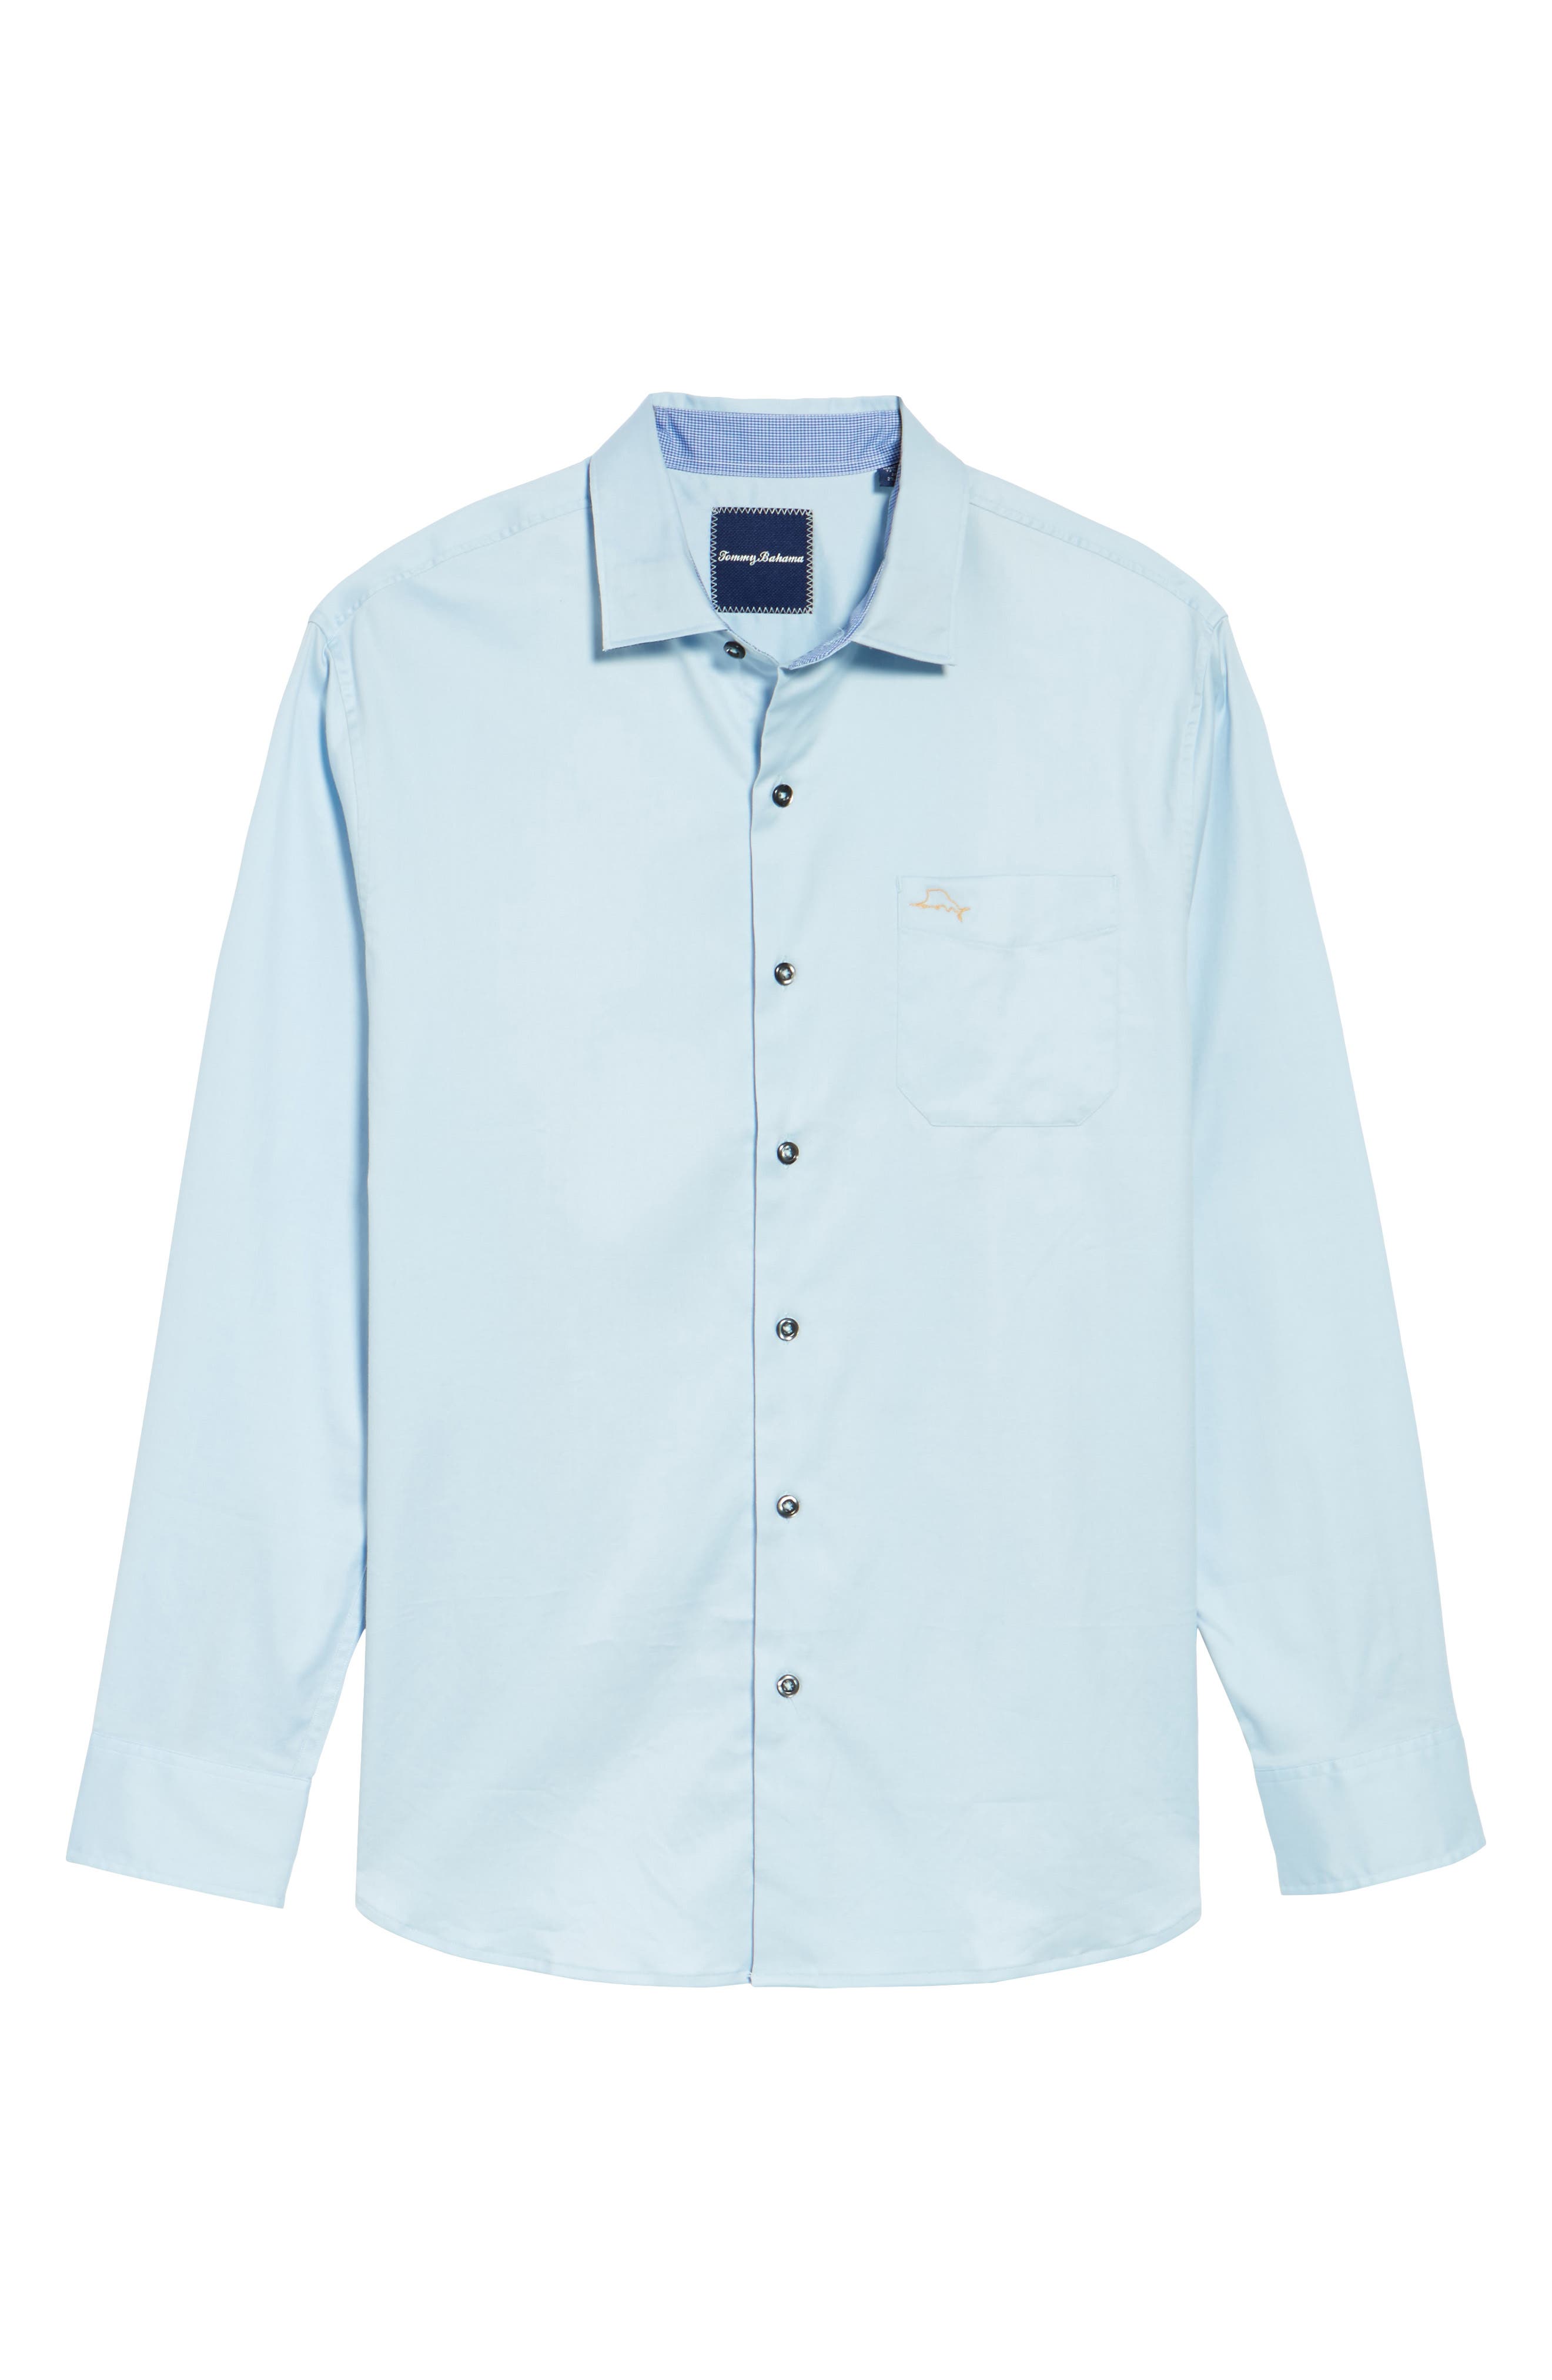 NWT $125 Tommy Bahama Light Blue LS Shirt Mens Cotton Silk Stretch Oasis Twill